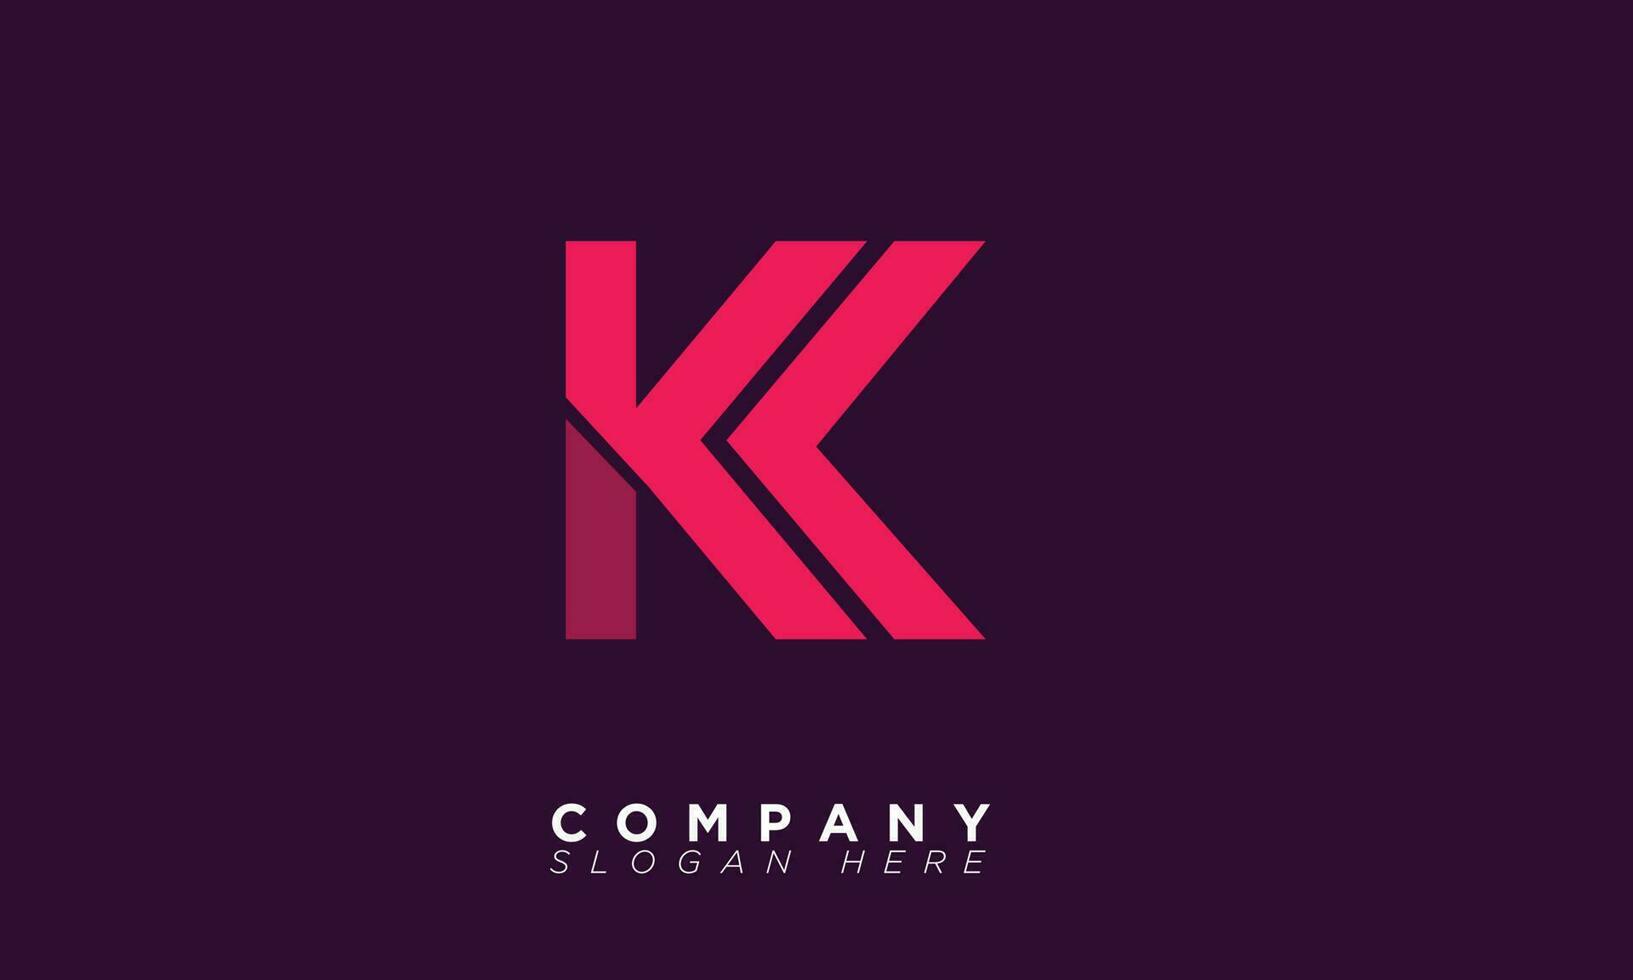 KK Alphabet letters Initials Monogram logo vector